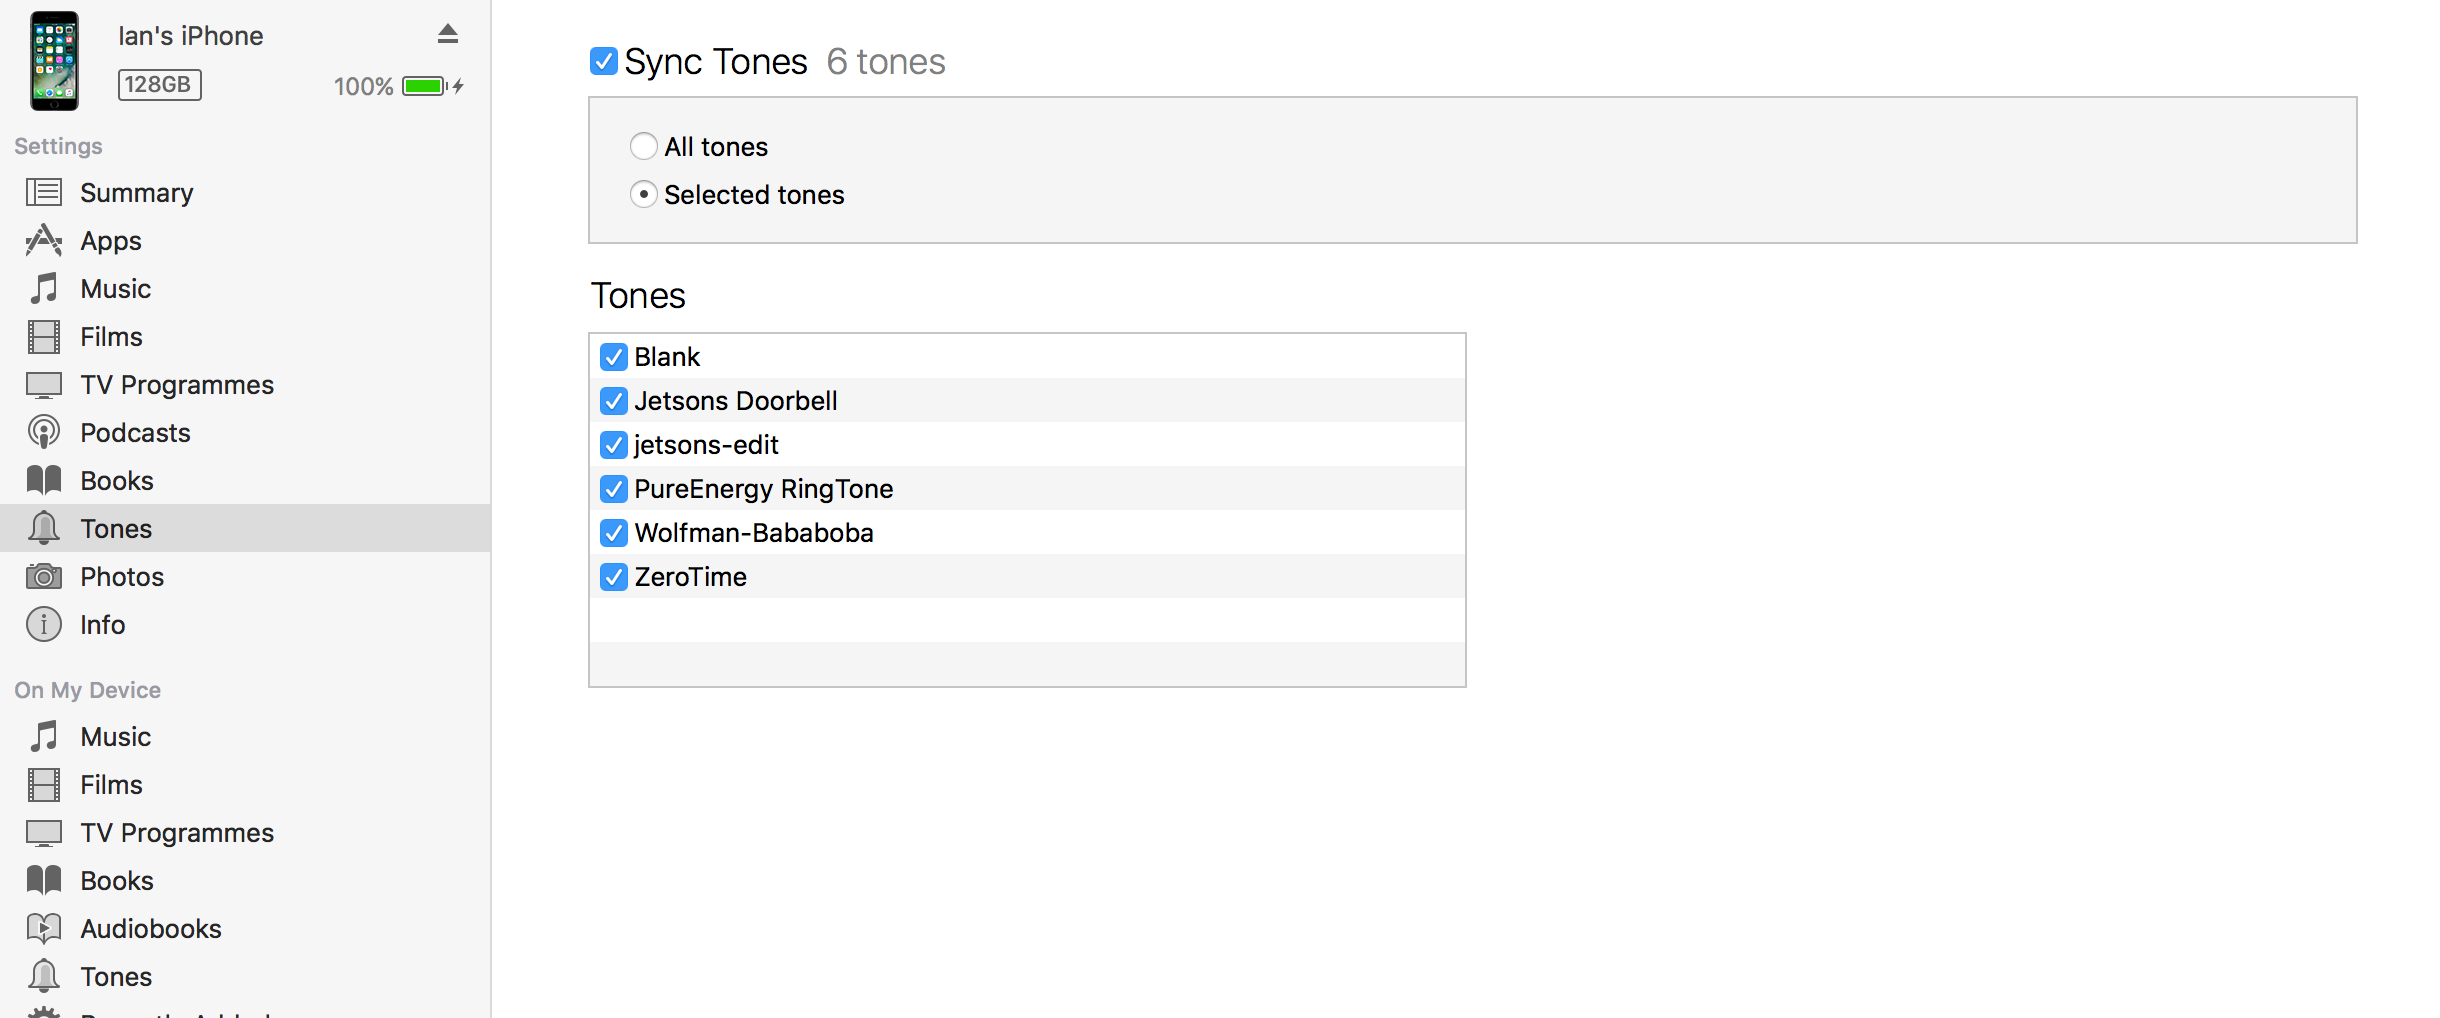 How to Transfer Ringtones to iPhone through iTunes?